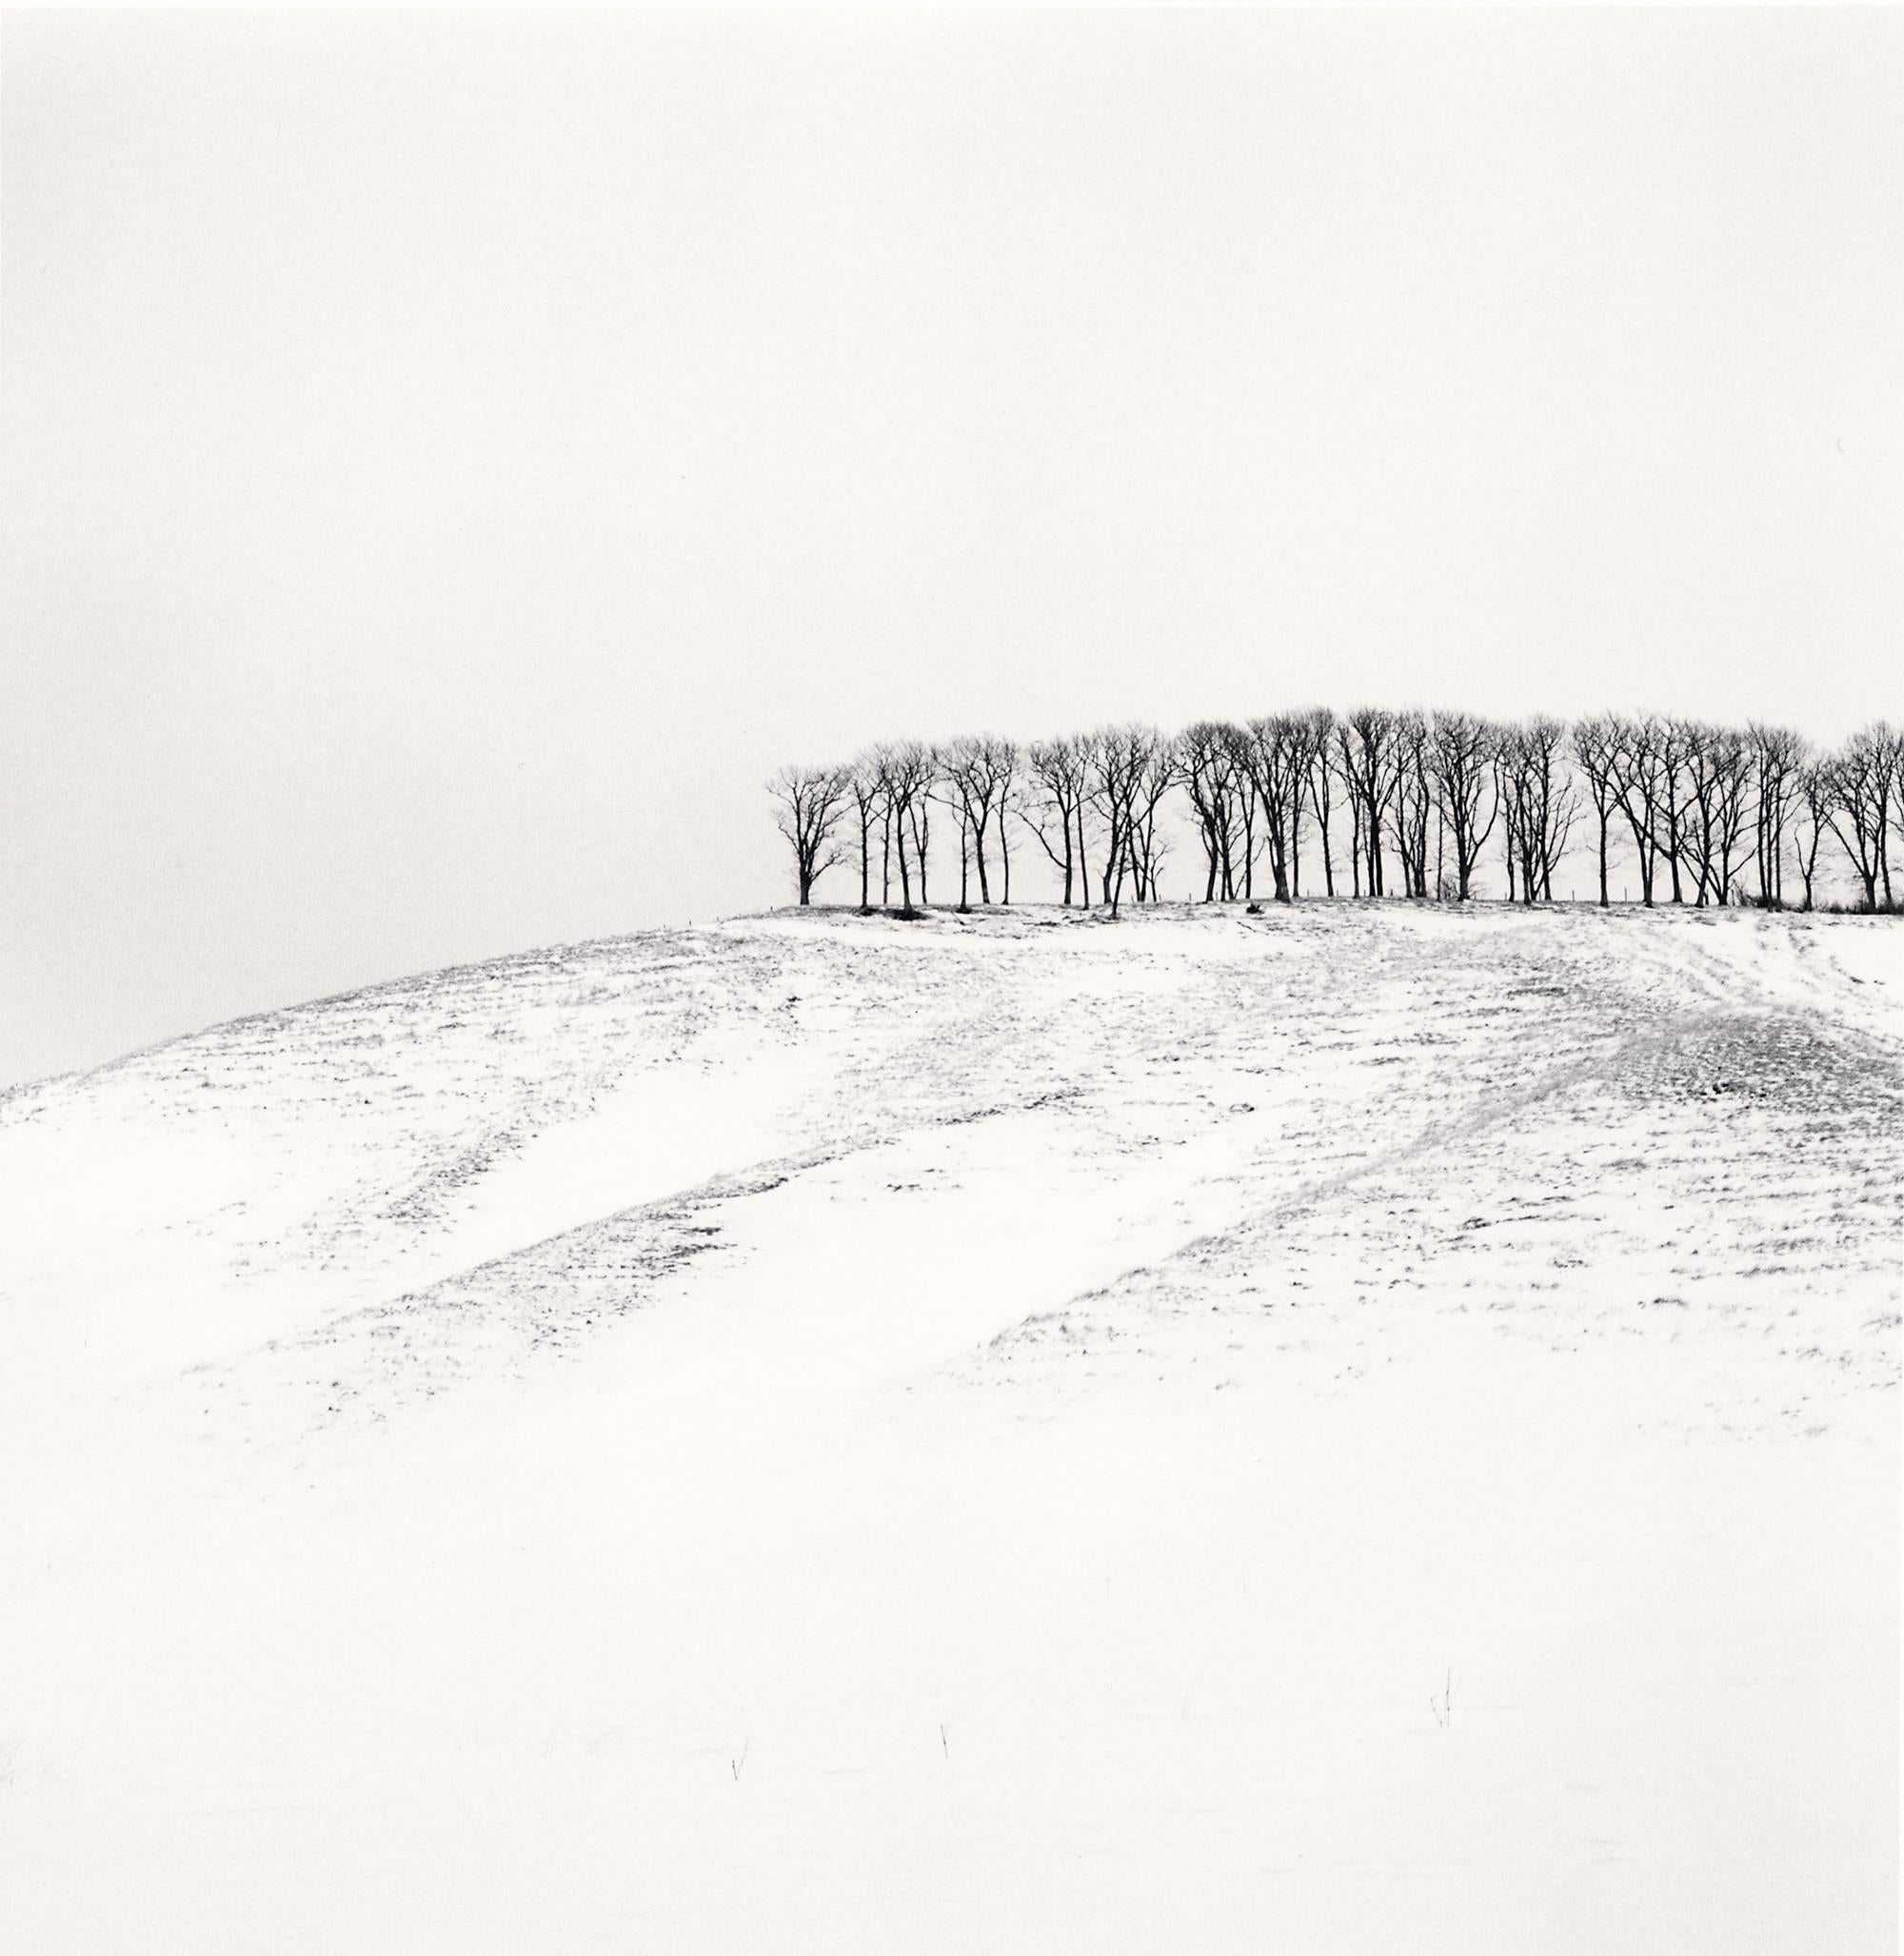 Michael Kenna Landscape Photograph - Hilltop Trees, Study 4, Teshikaga, Hokkaido, Japan. 2016